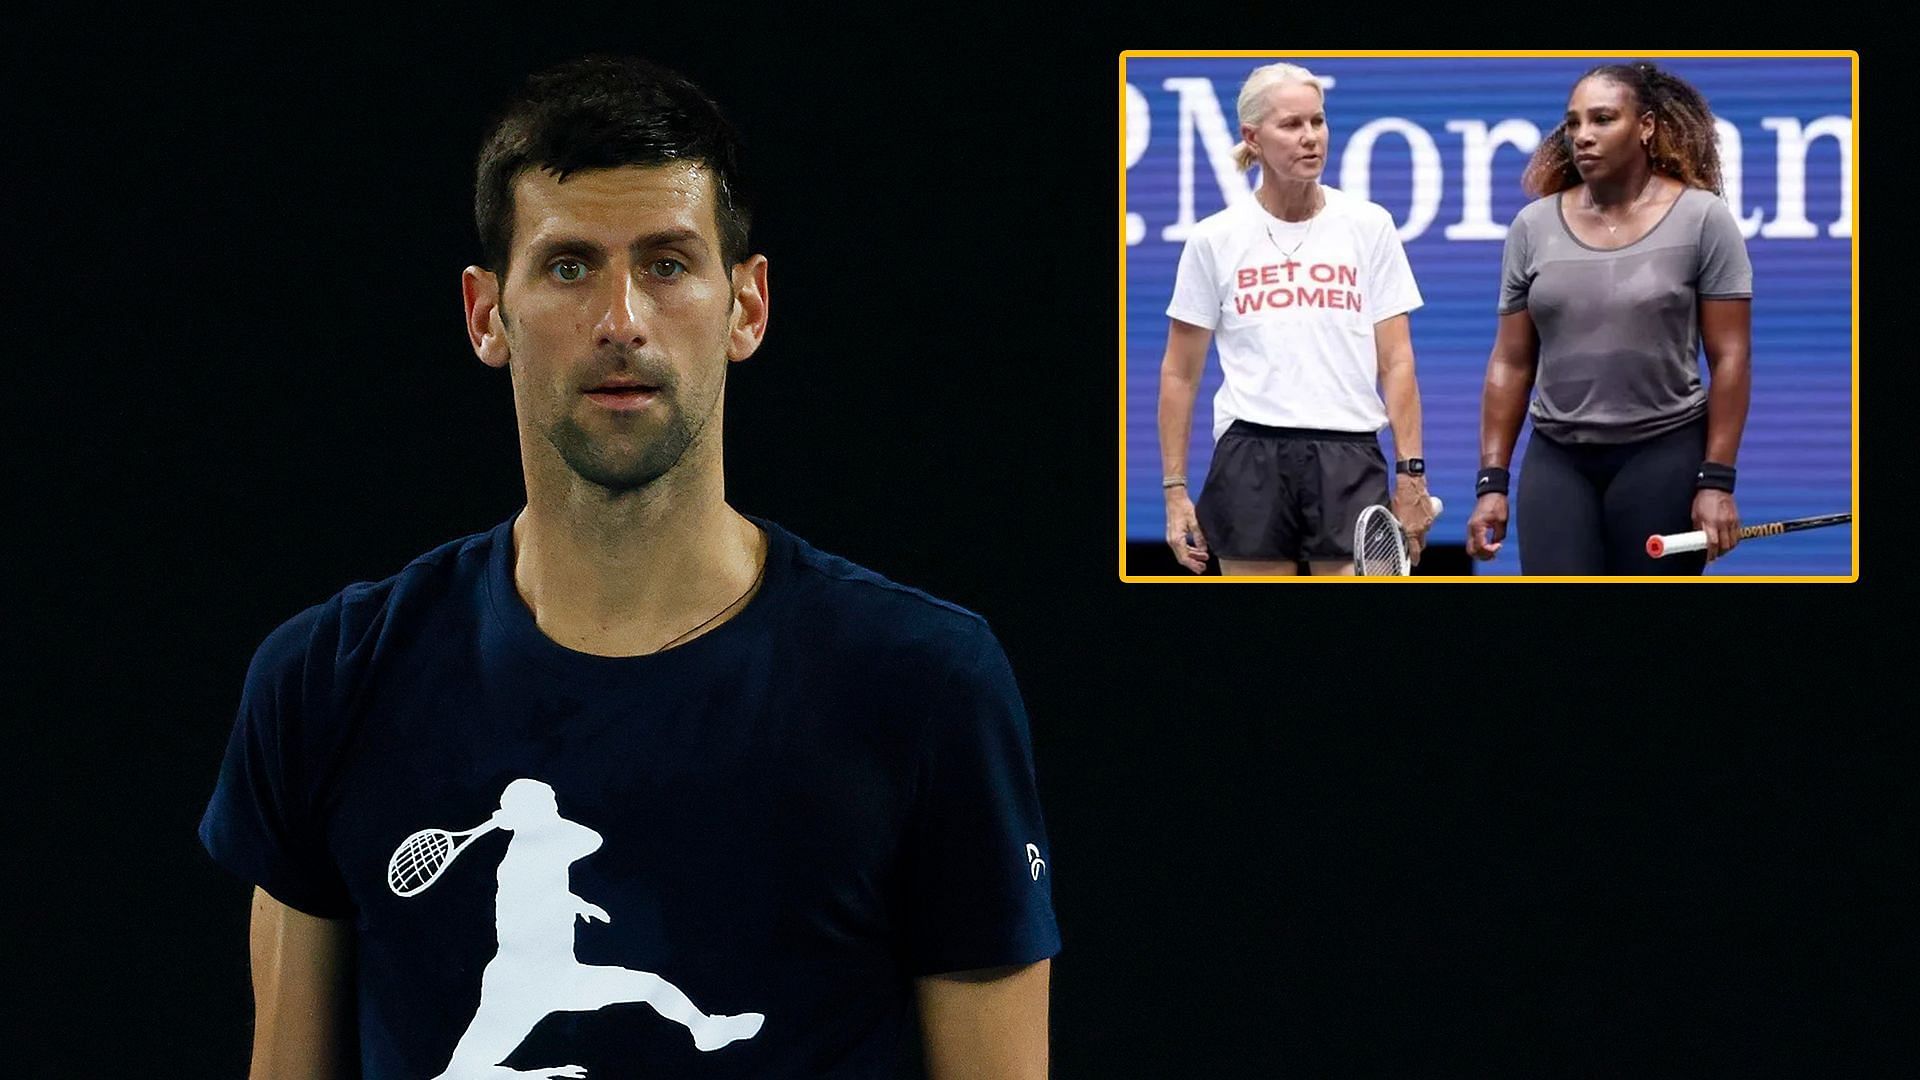 Rennae Stubbs calls out abuse from Novak Djokovic